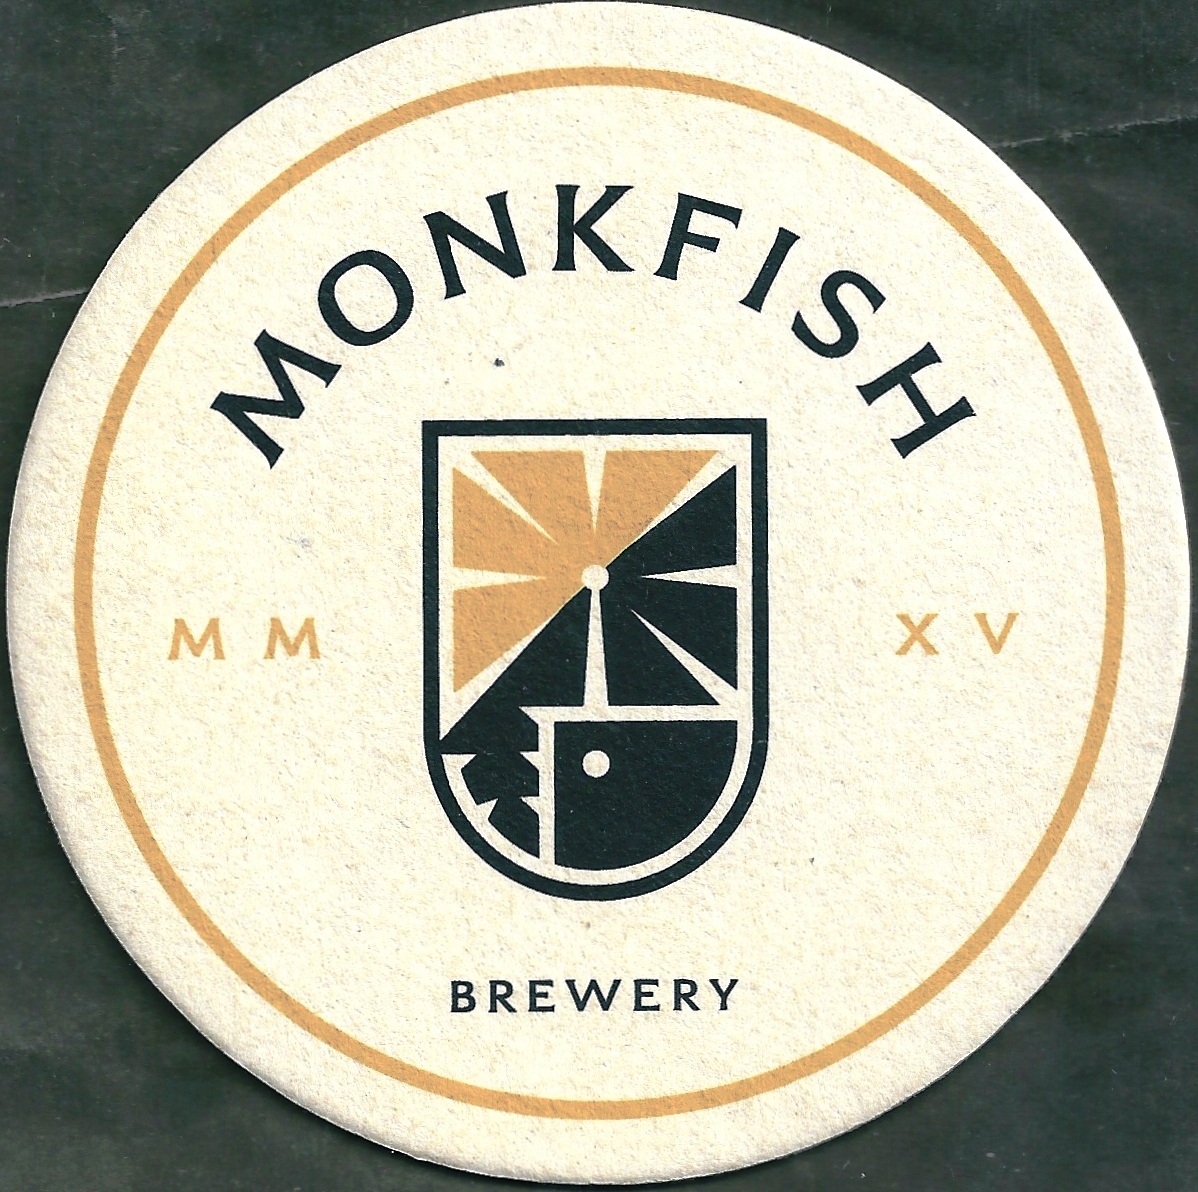 Monkfish Brewery г. Самара (ООО Монкфиш)